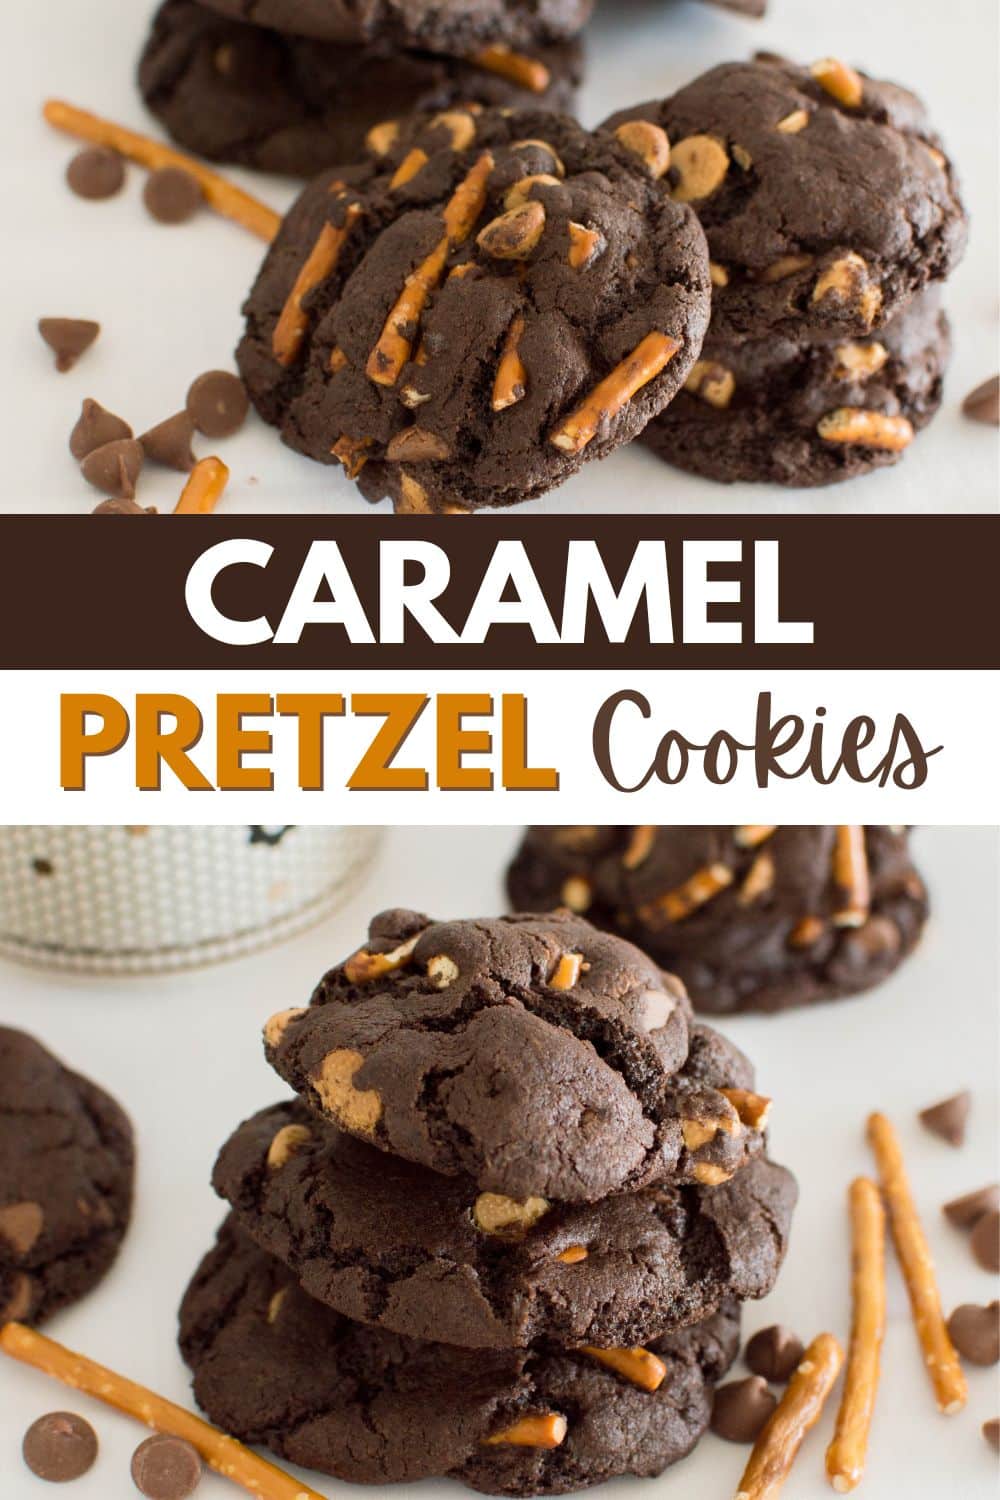 Caramel pretzel cookies arranged on a white plate.